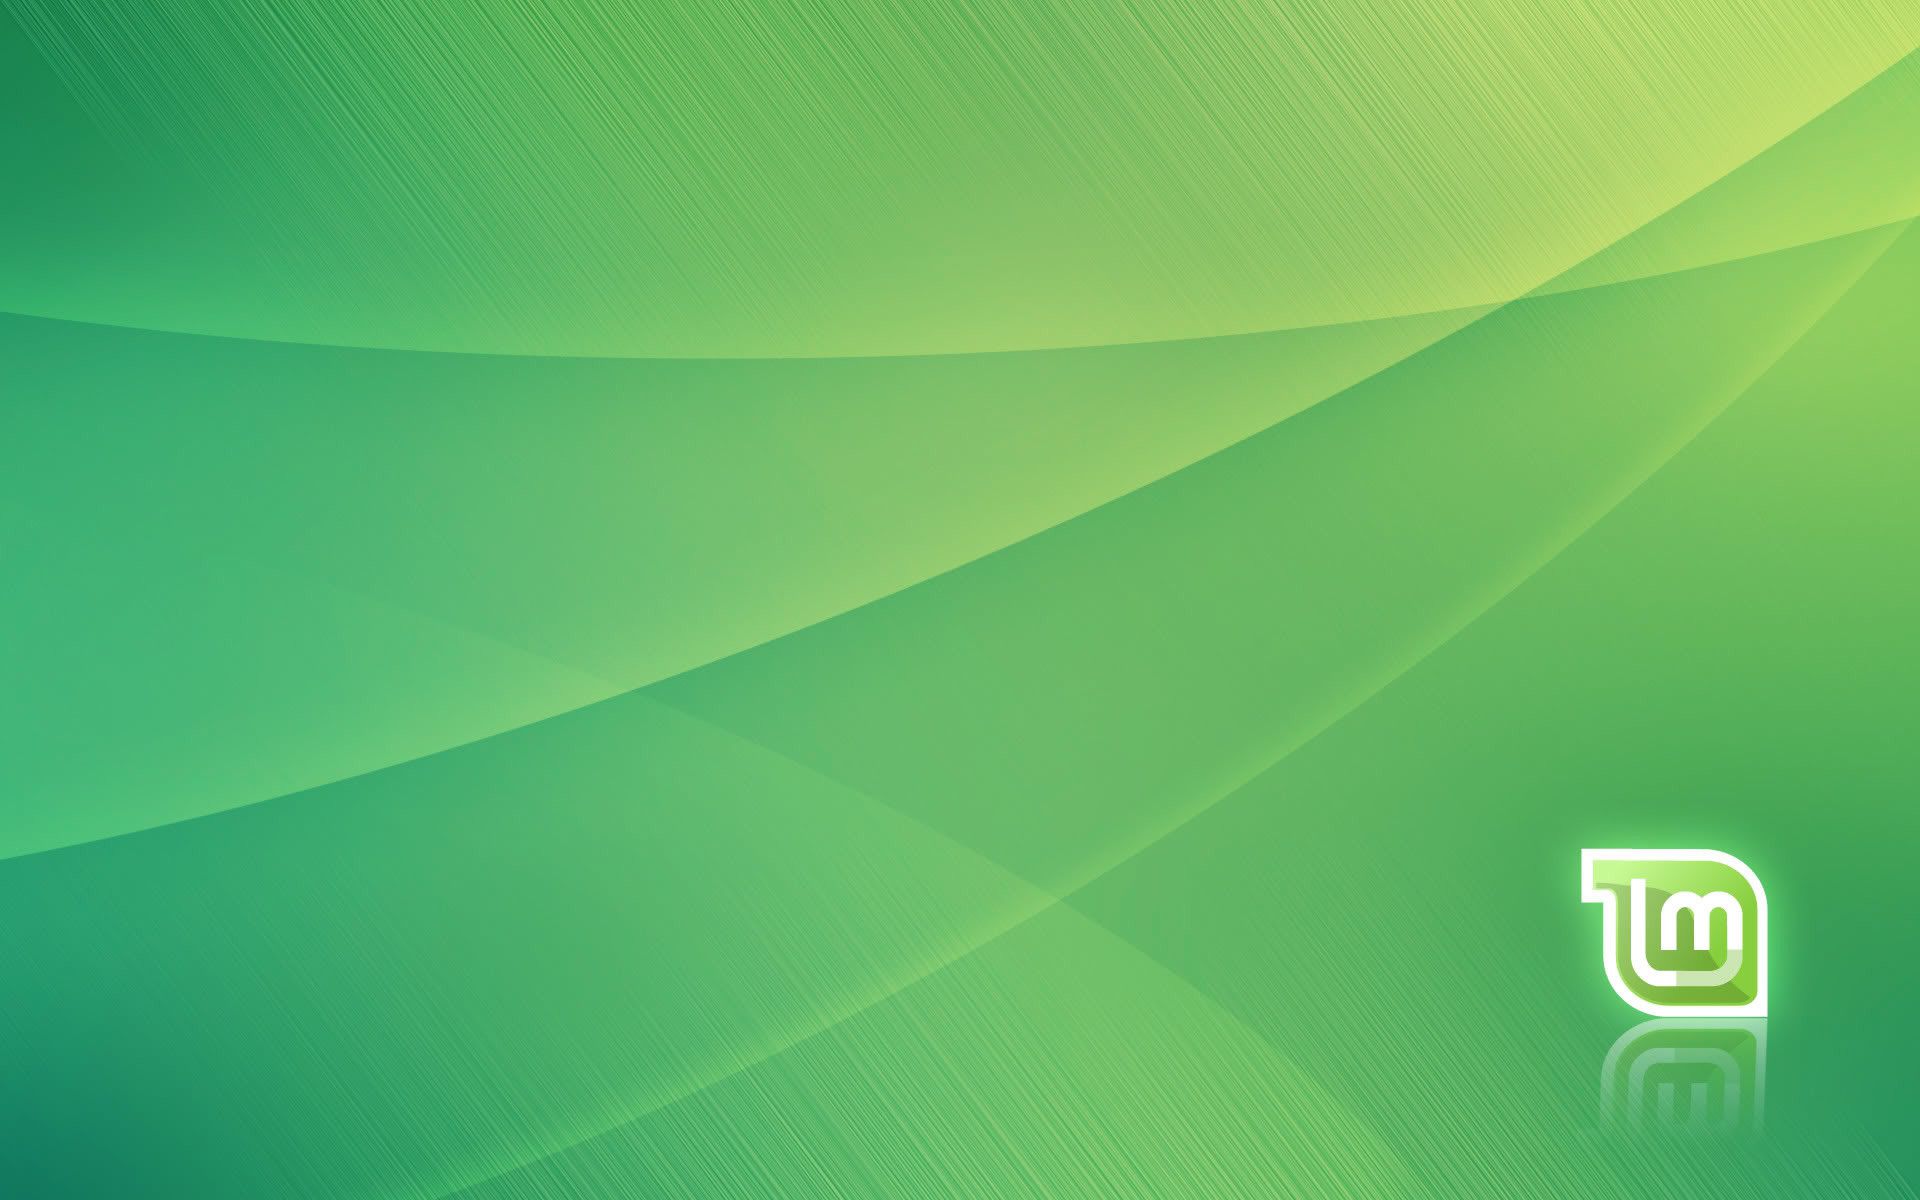 Green Linux Wallpapers 4k Hd Green Linux Backgrounds On Wallpaperbat